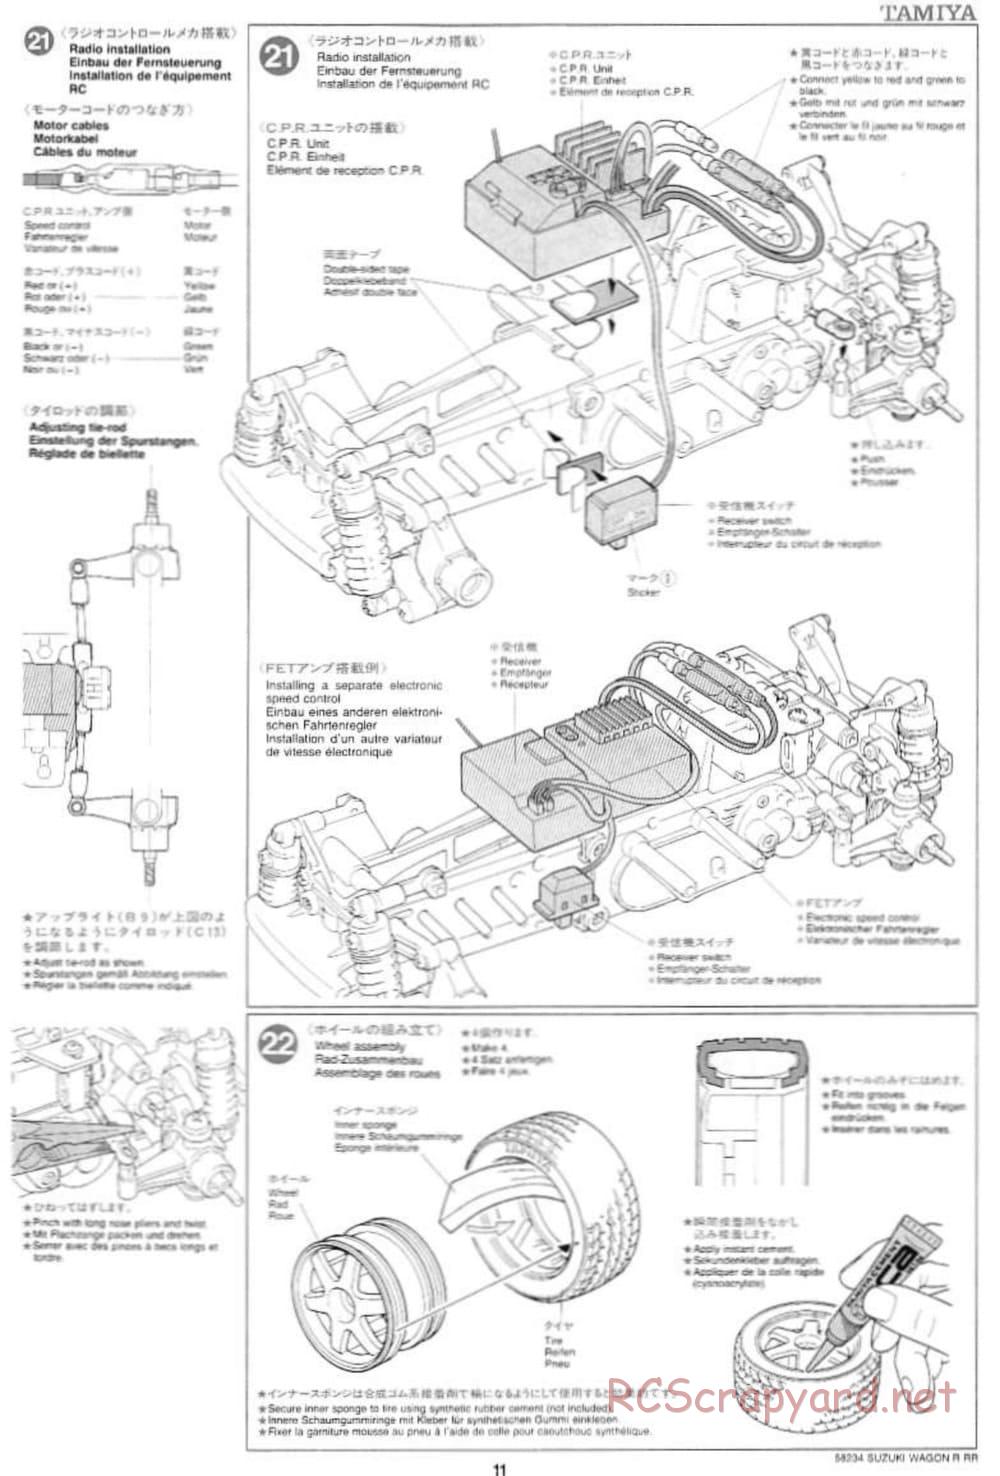 Tamiya - Suzuki WagonR-RR - M03 Chassis - Manual - Page 11